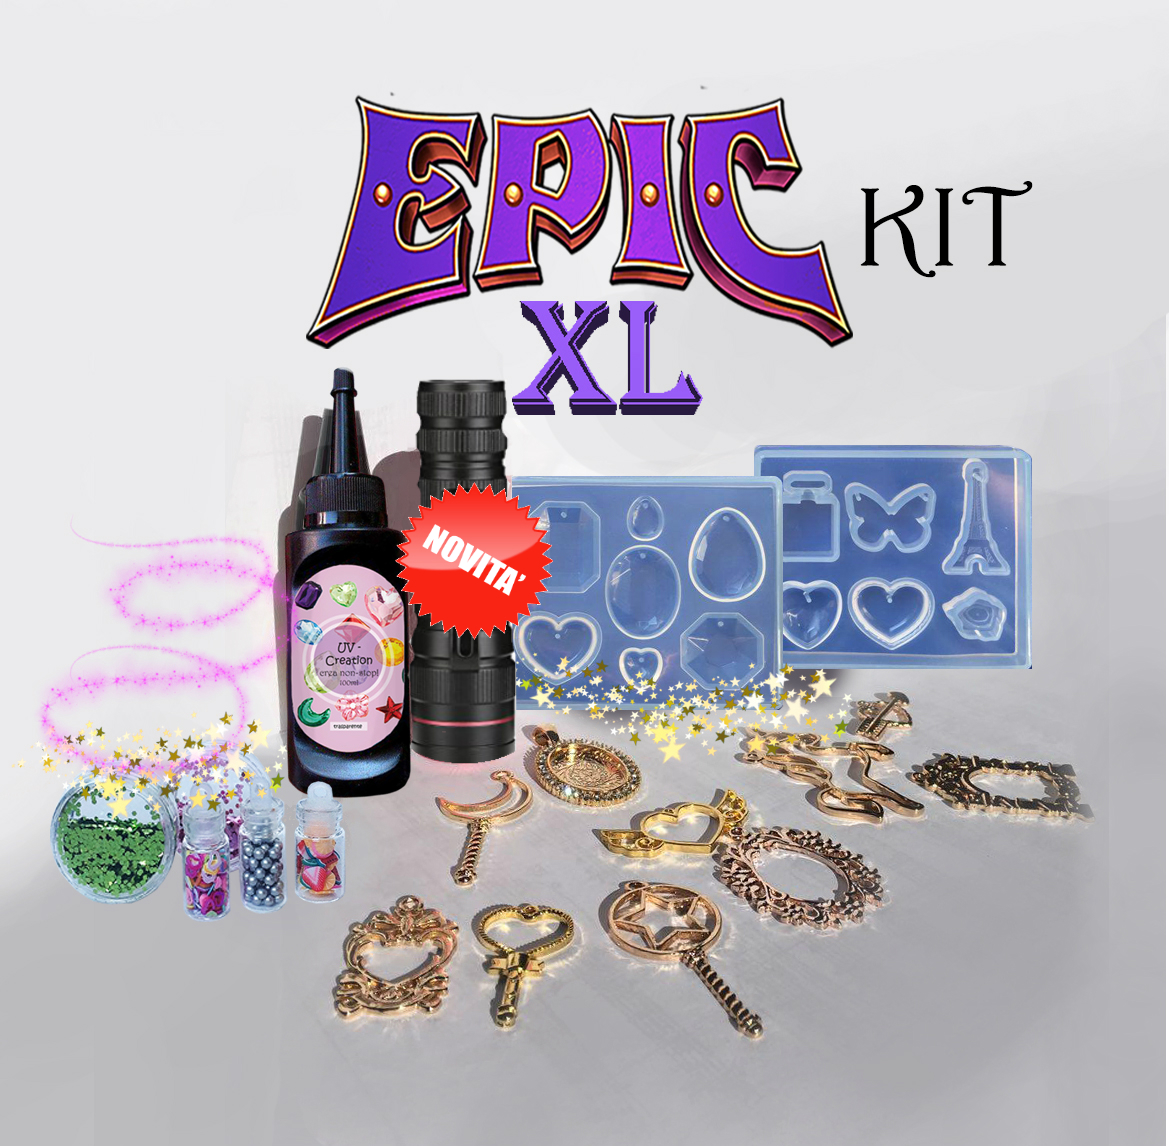 EPIC KIT o EPIC KIT XL